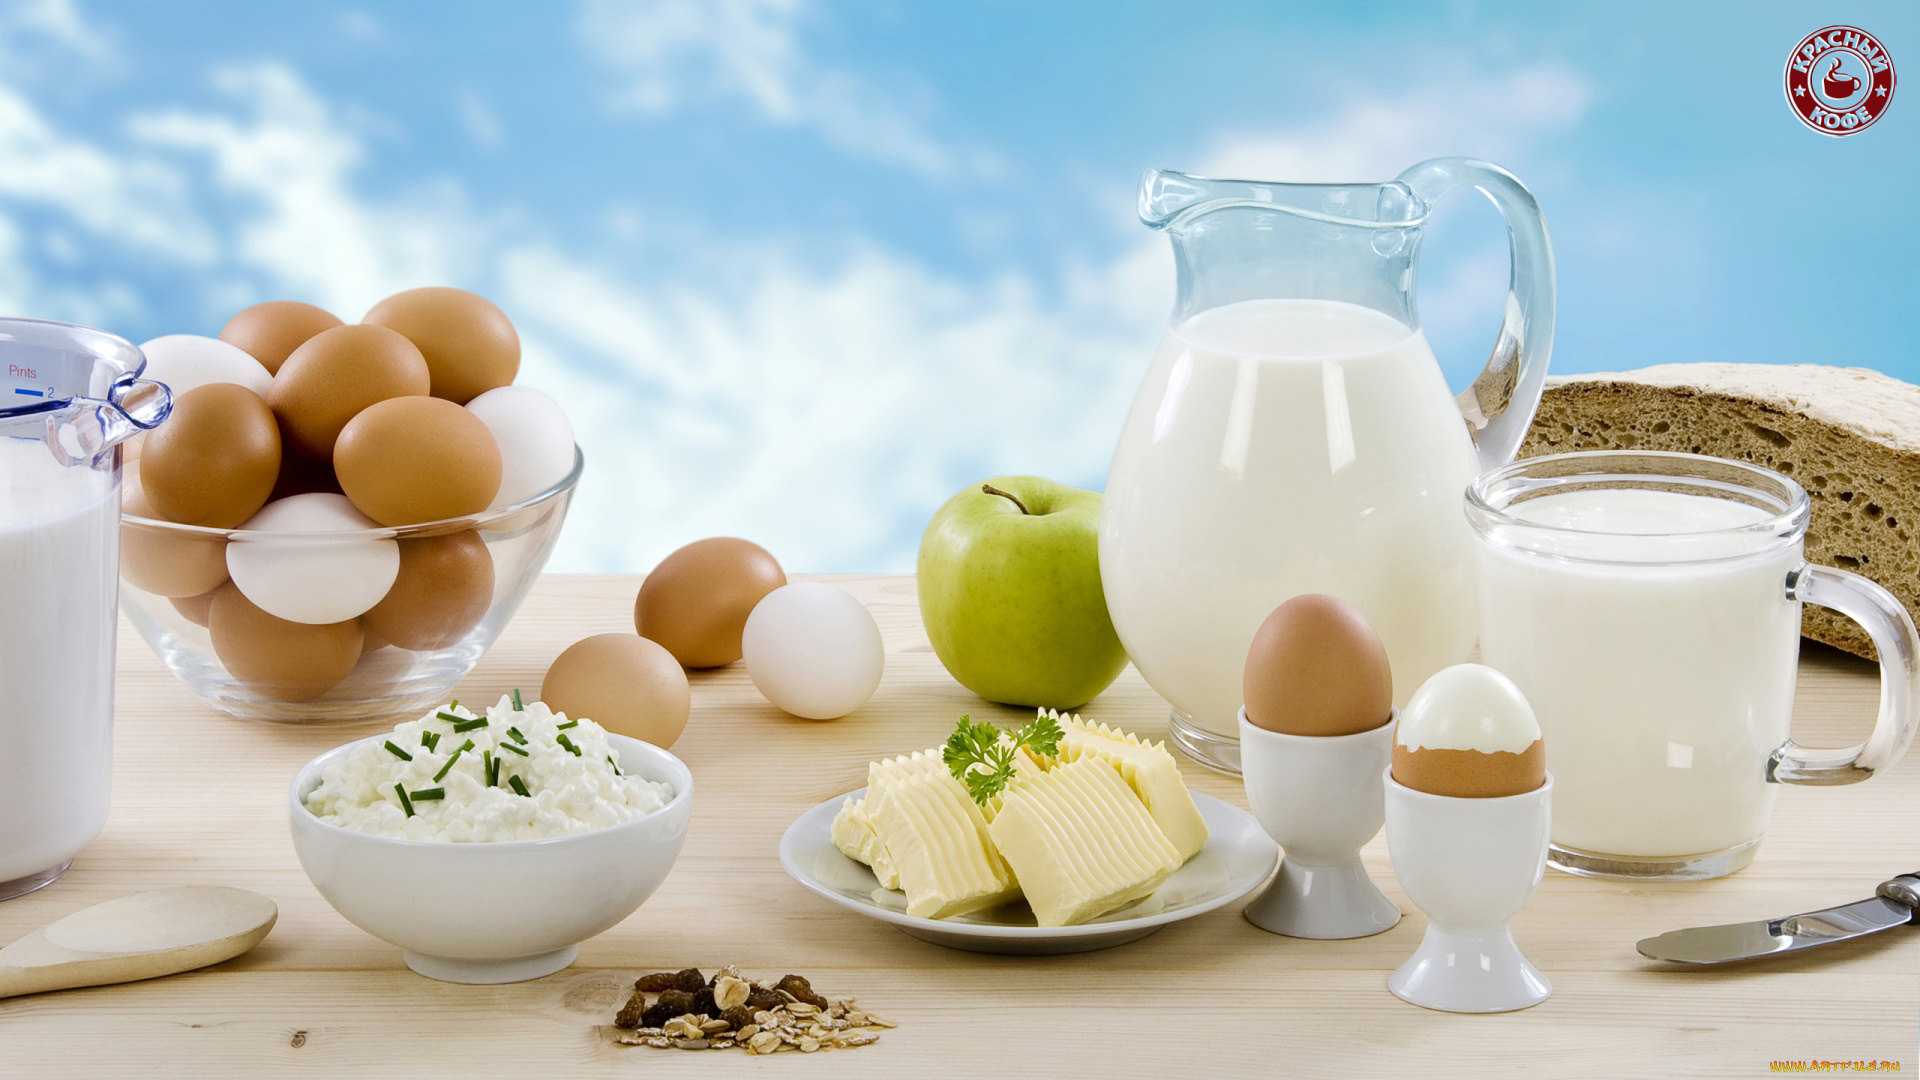 еда, натюрморт, яйца, творог, кувшин, молоко, хлеб, завтрак, яблоко, масло